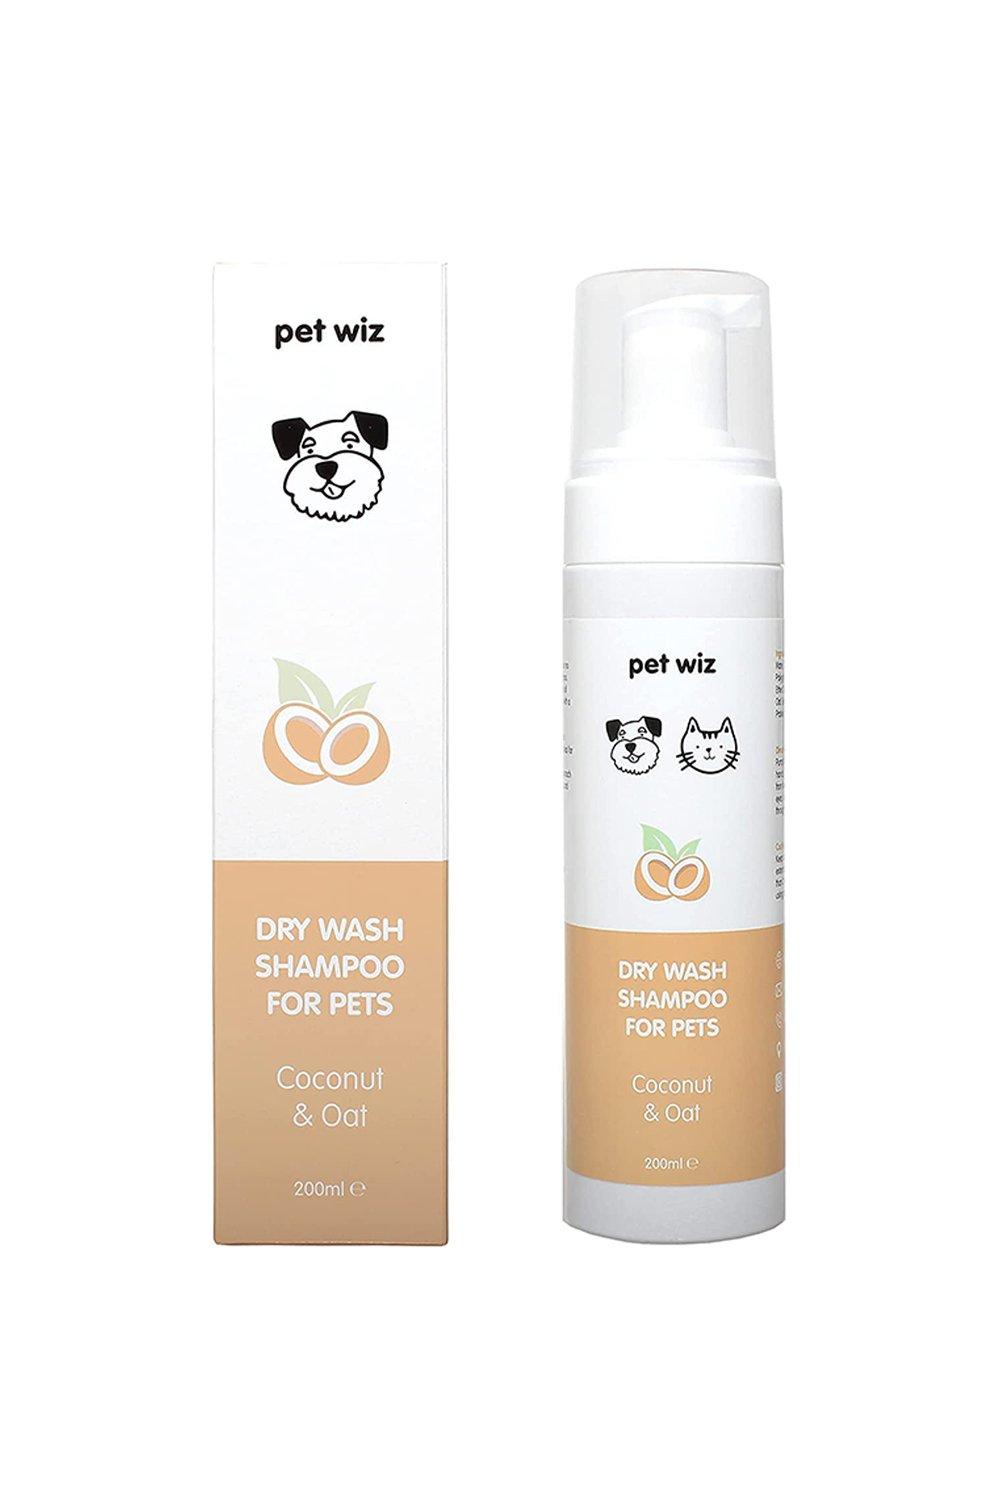 pet wiz Dry Wash Shampoo for Pets